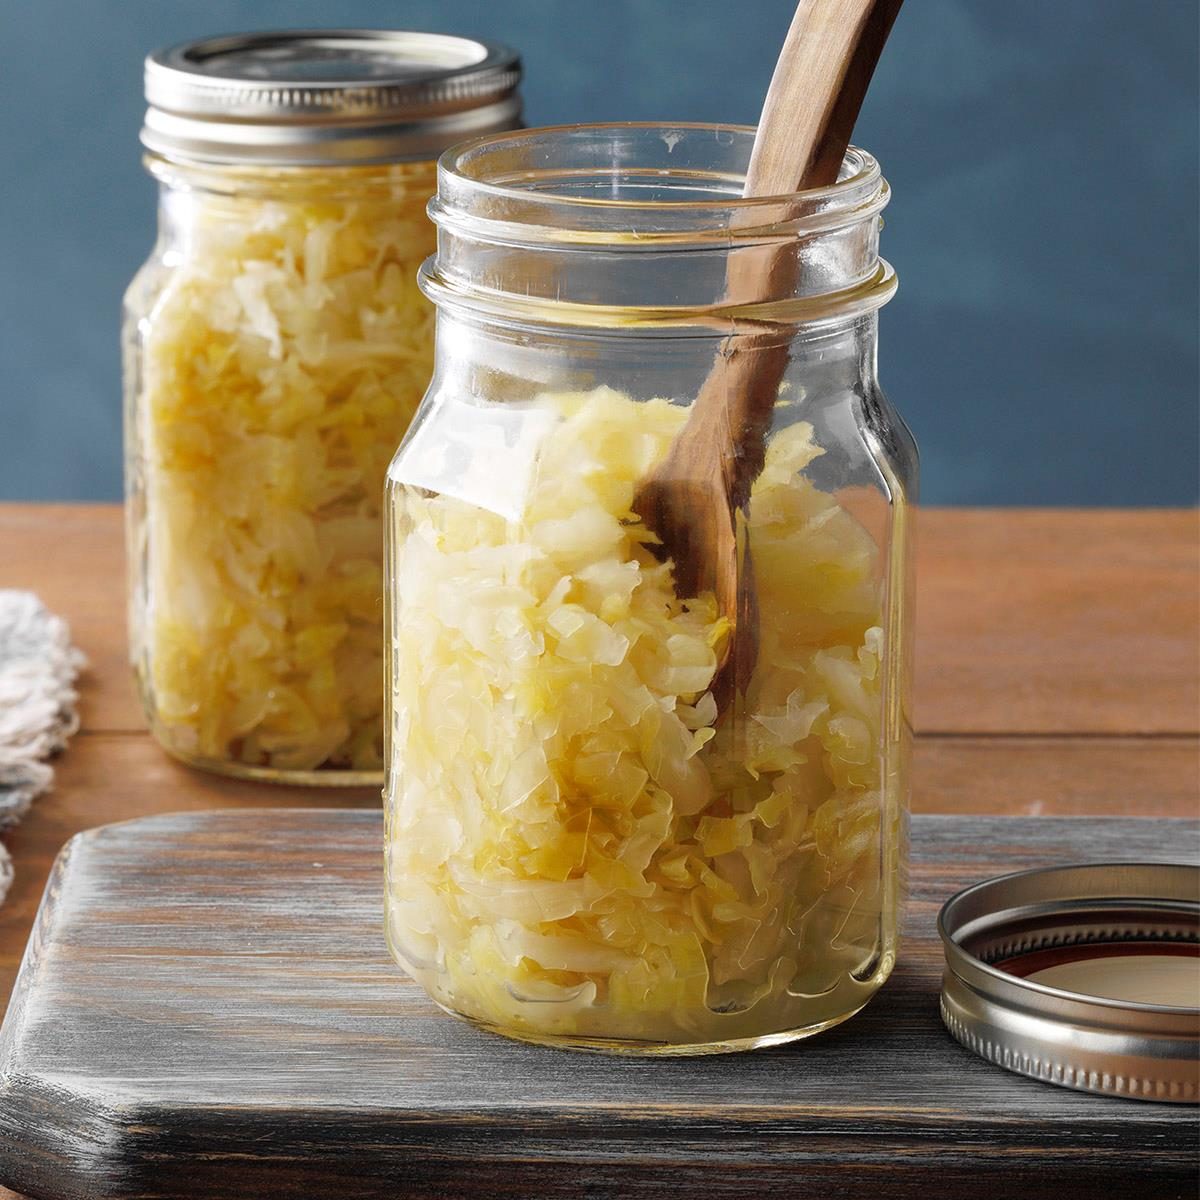 Homemade Sauerkraut Recipe: How to Make It | Taste of Home